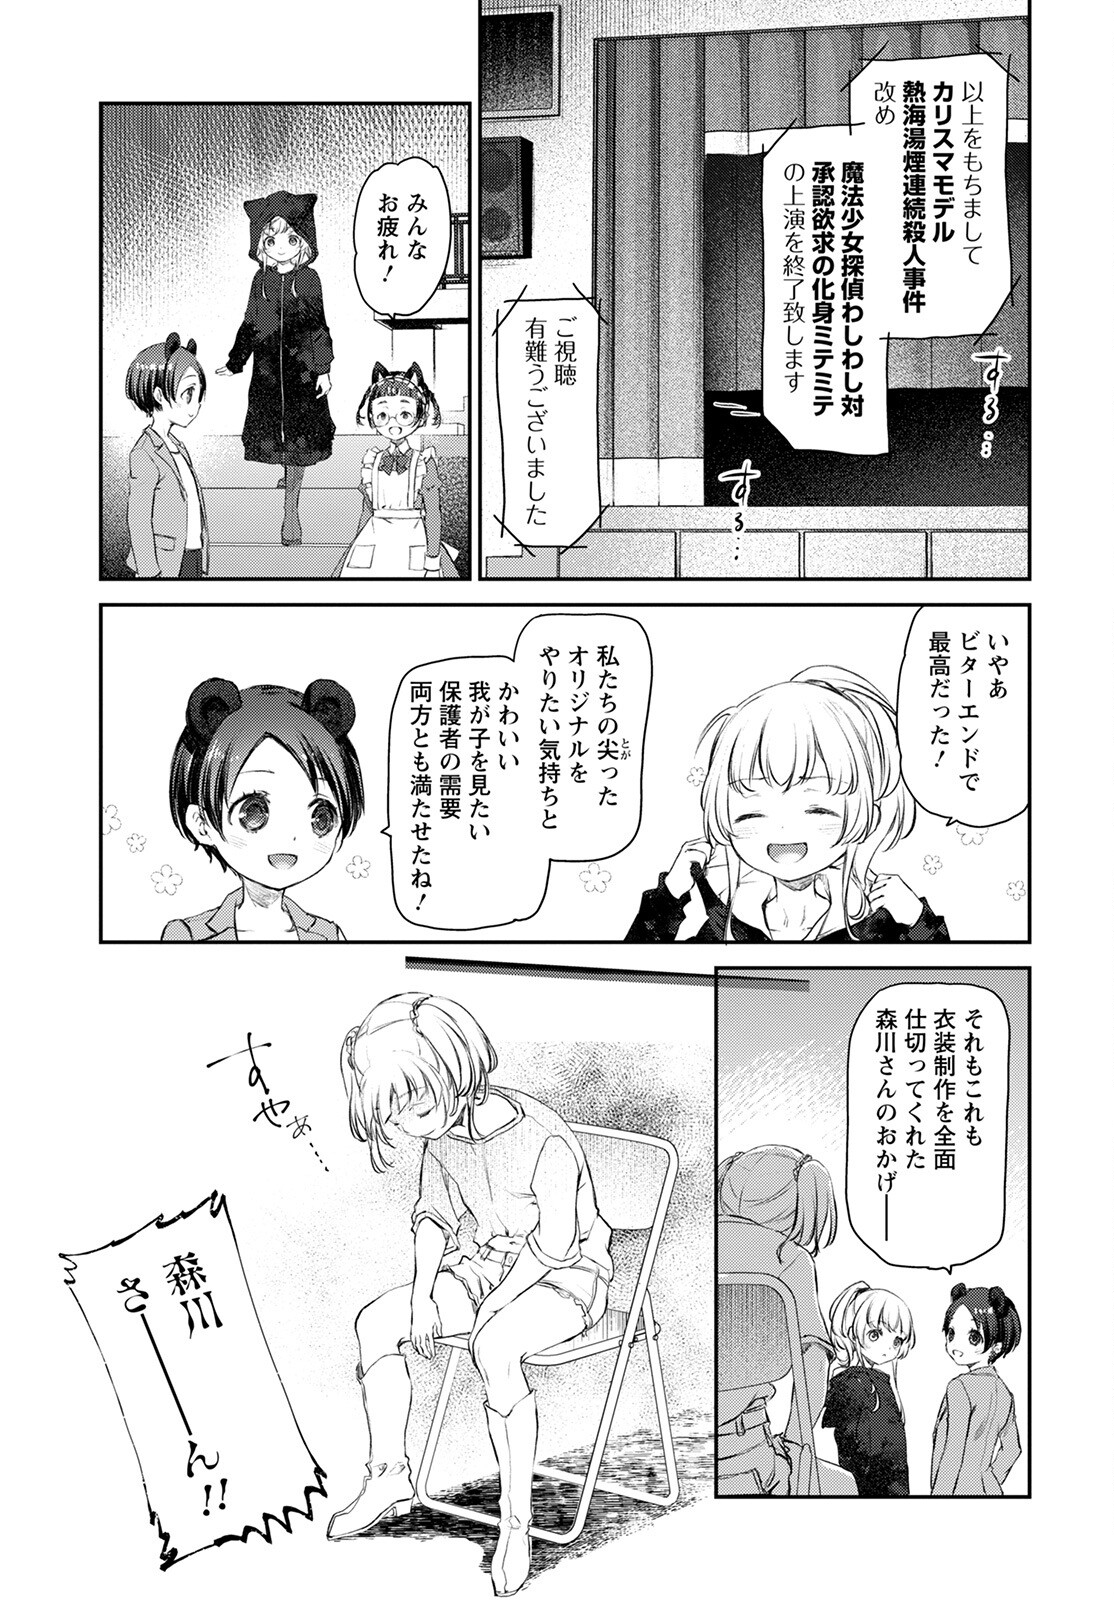 Uchi no Maid ga Uzasugiru! - Chapter 53 - Page 25